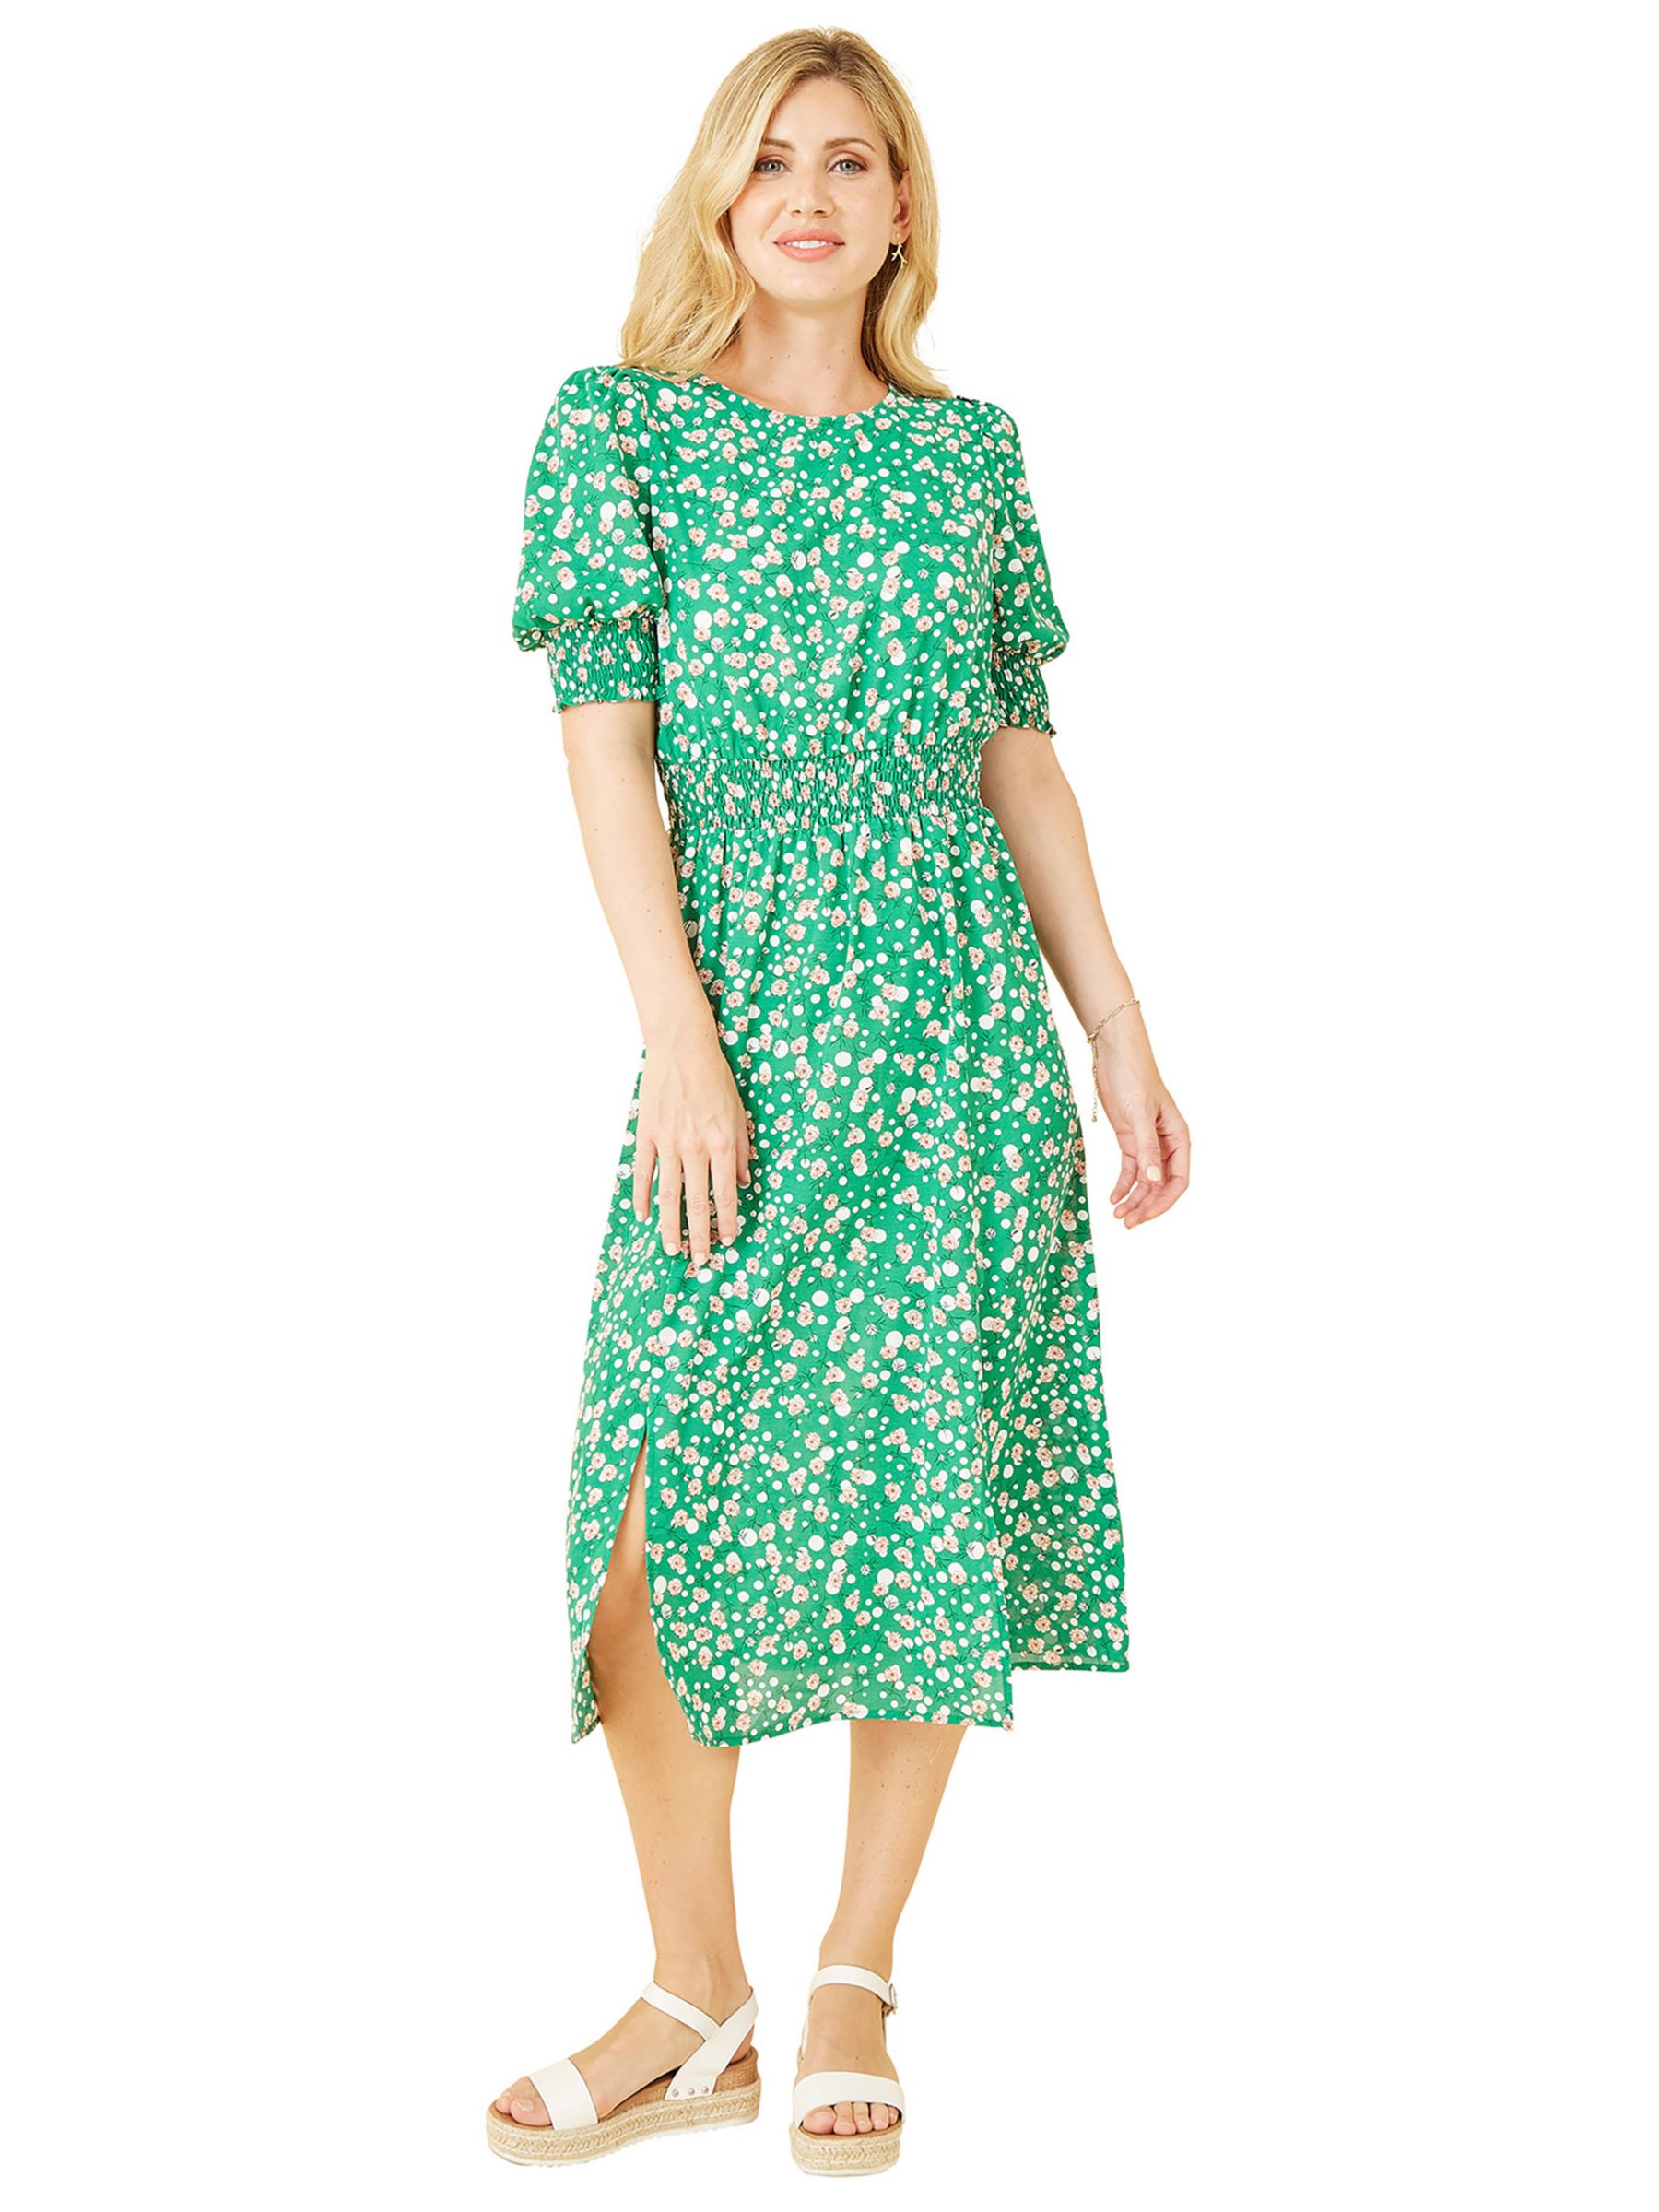 Yumi Mela London Floral Print Ruched Midi Dress, Green, 8